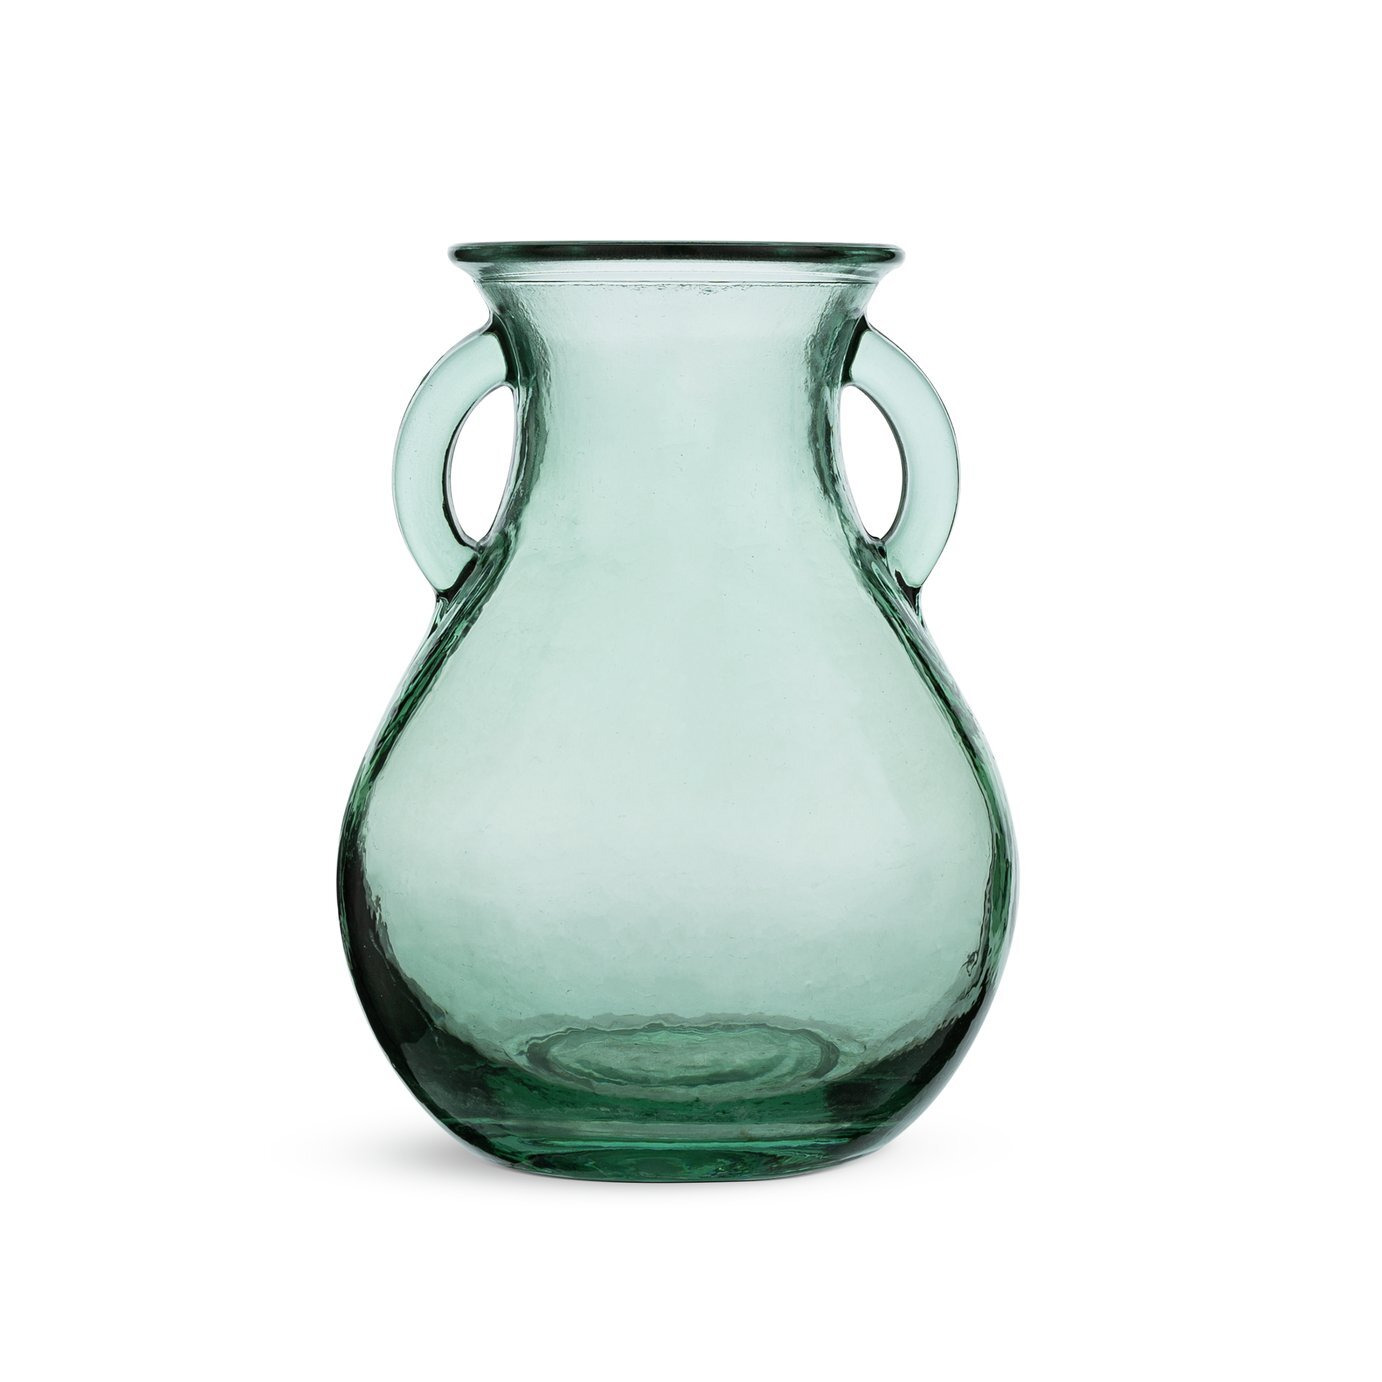 Habitat Small Handled Glass Vase - Green - image 1